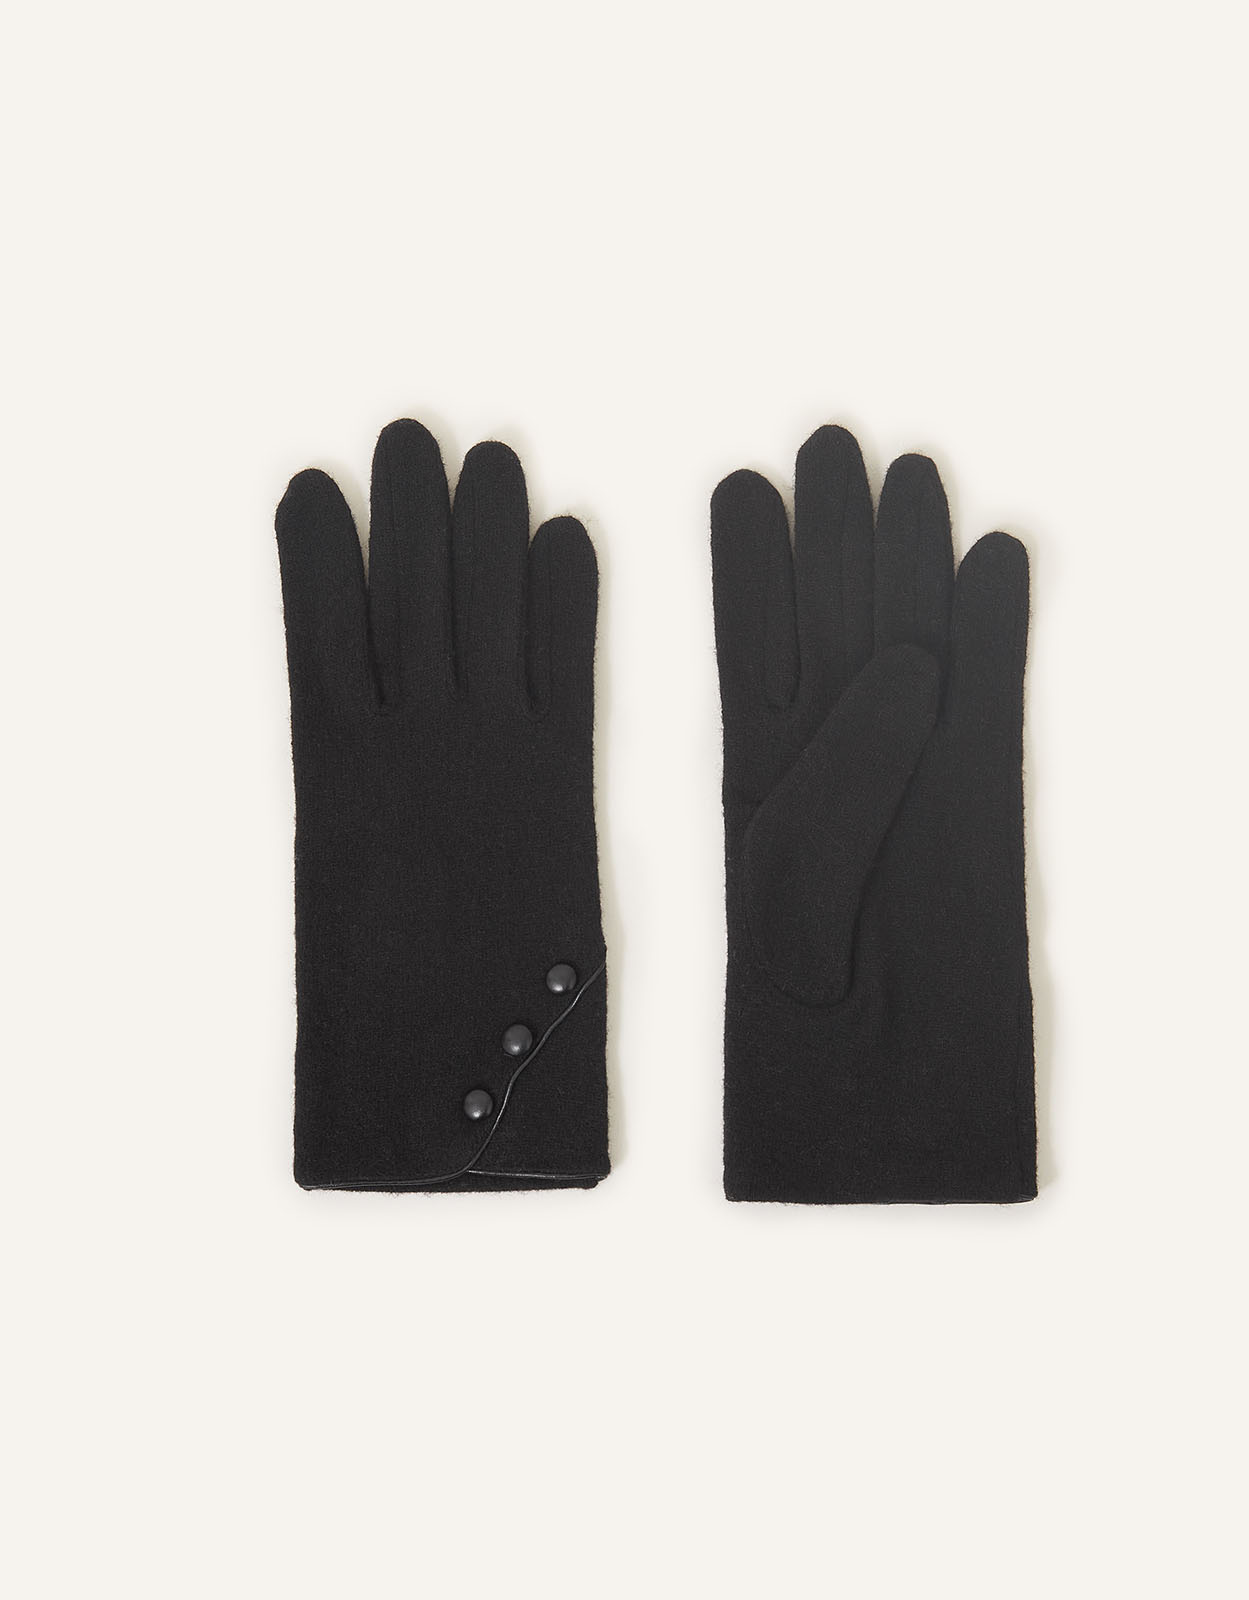 Accessorize Women's Button Gloves in Wool Blend Black, Size: M / L